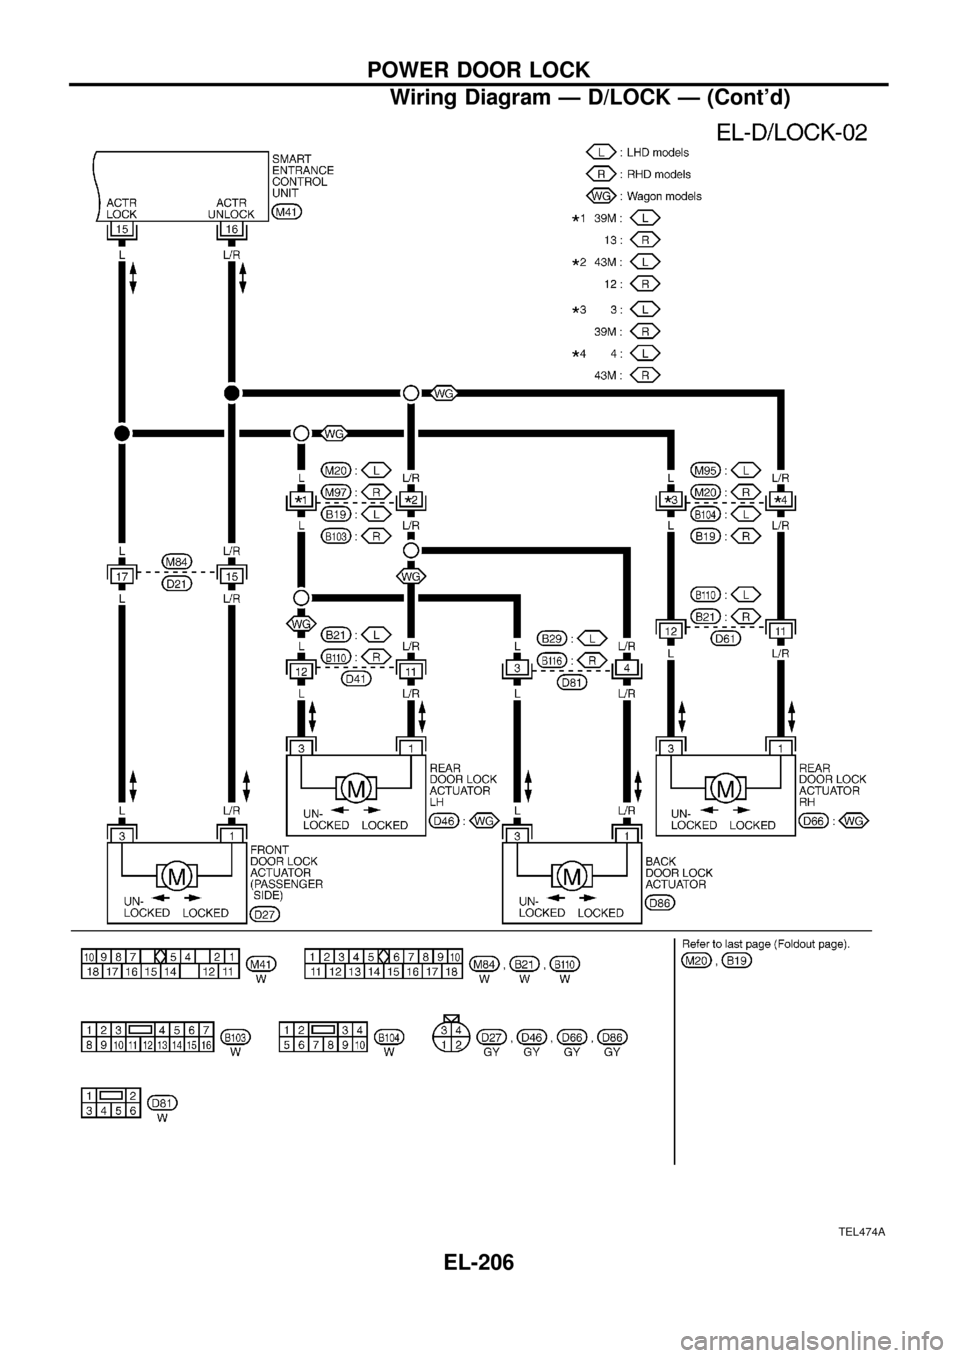 NISSAN PATROL 1998 Y61 / 5.G Electrical System Workshop Manual TEL474A
POWER DOOR LOCK
Wiring Diagram Ð D/LOCK Ð (Contd)
EL-206 